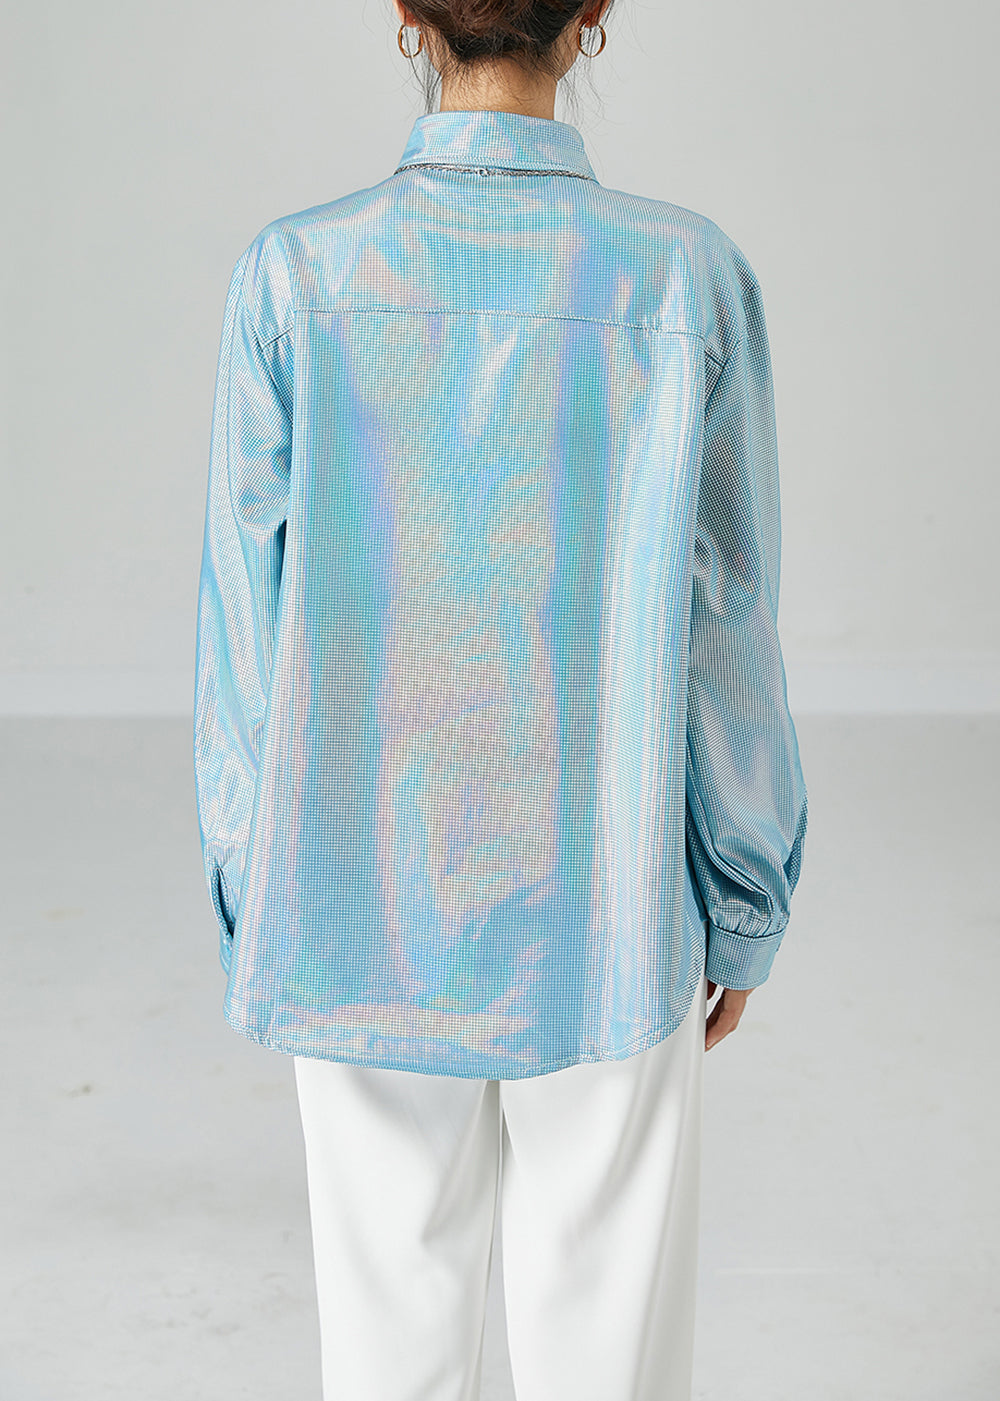 Fashion Light Blue Peter Pan Collar Oversized Plaid Shirts Spring LY2452 - fabuloryshop